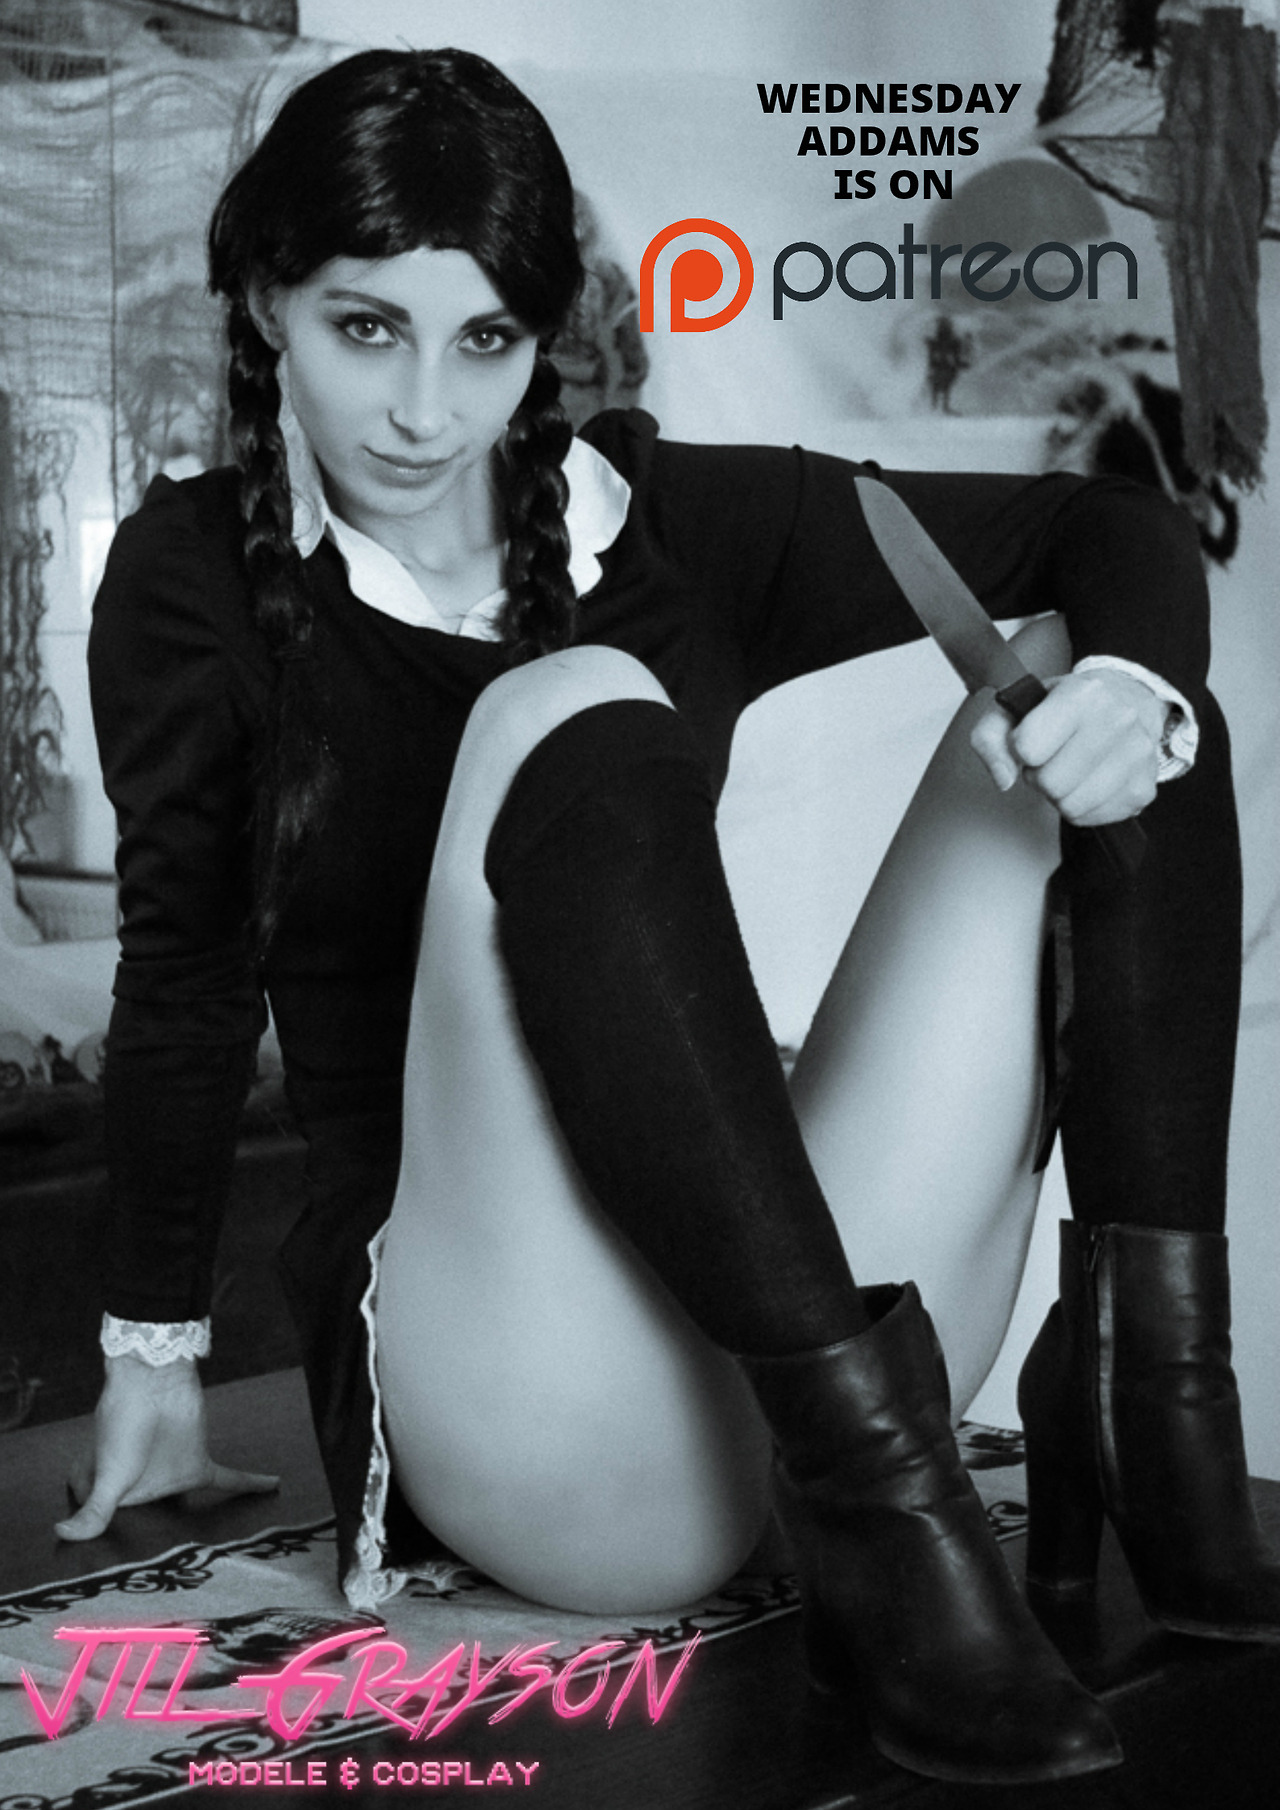 Sexy Wednesday Addams - Spandex & Cosplay â€” jill-grayson: Jill Grayson / sexy ...